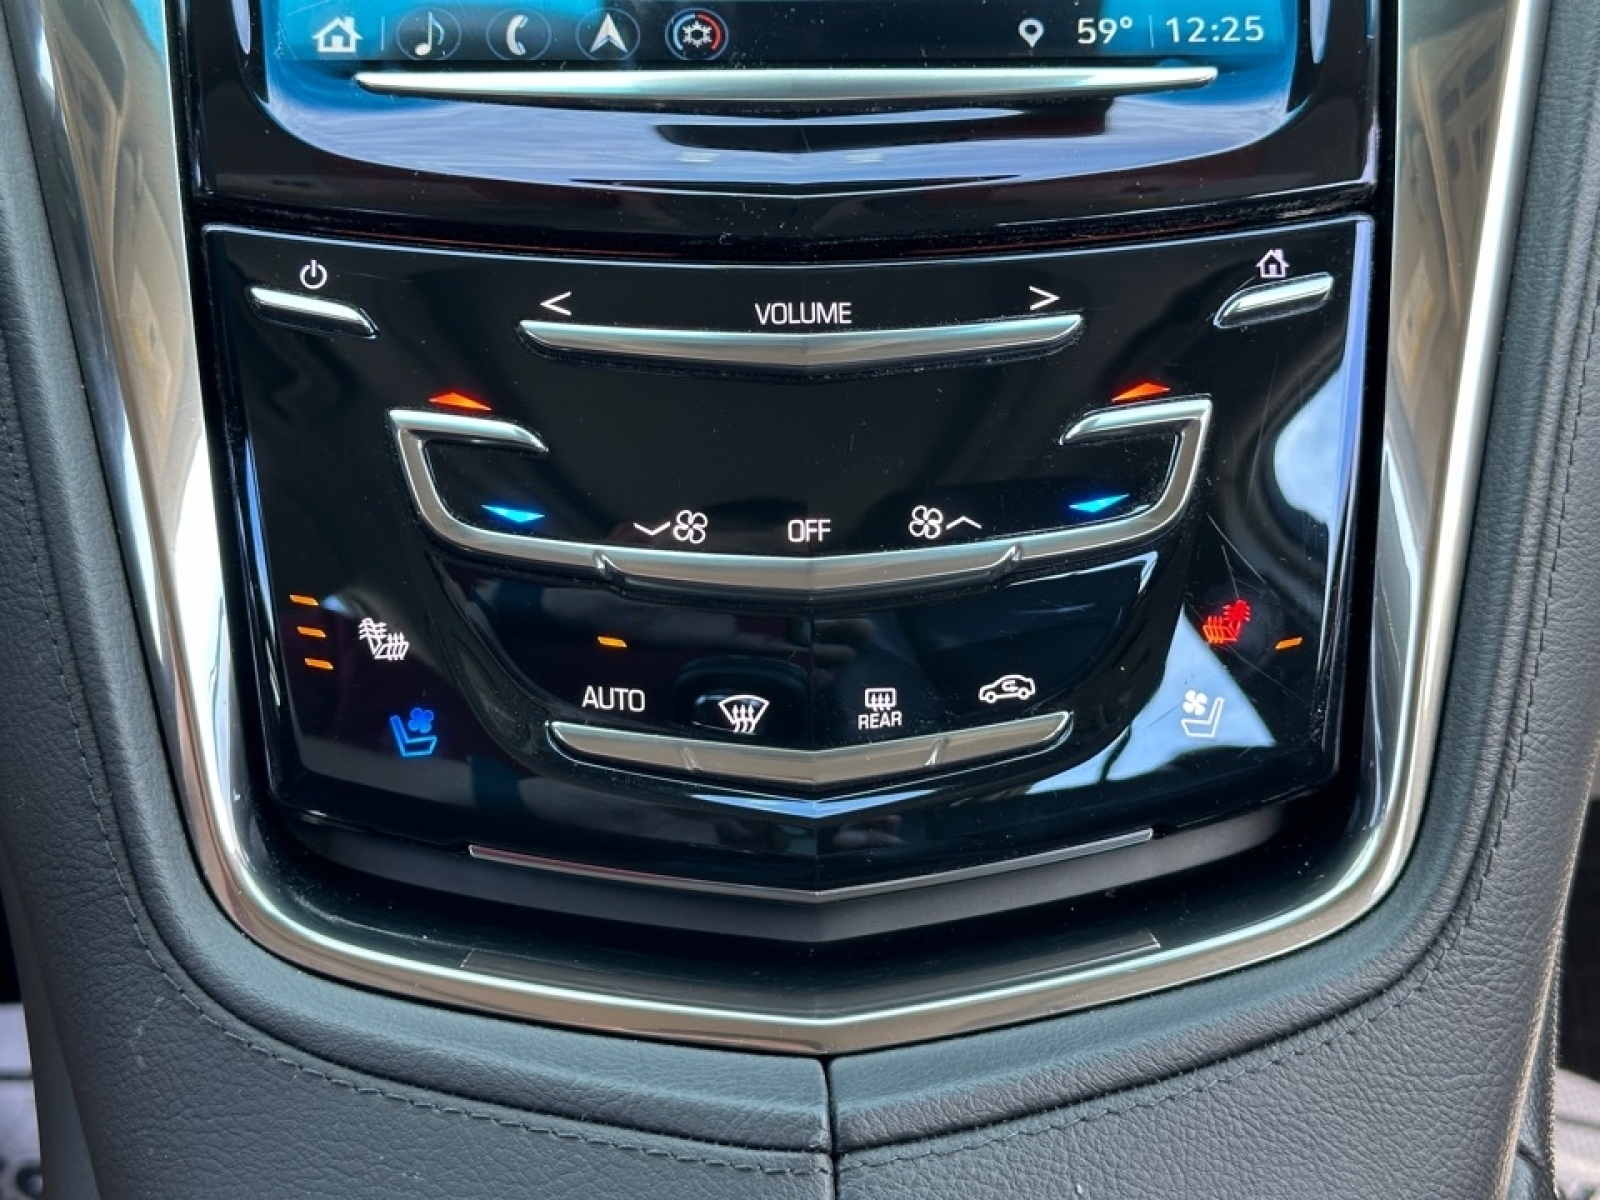 2019 Cadillac CTS Sedan